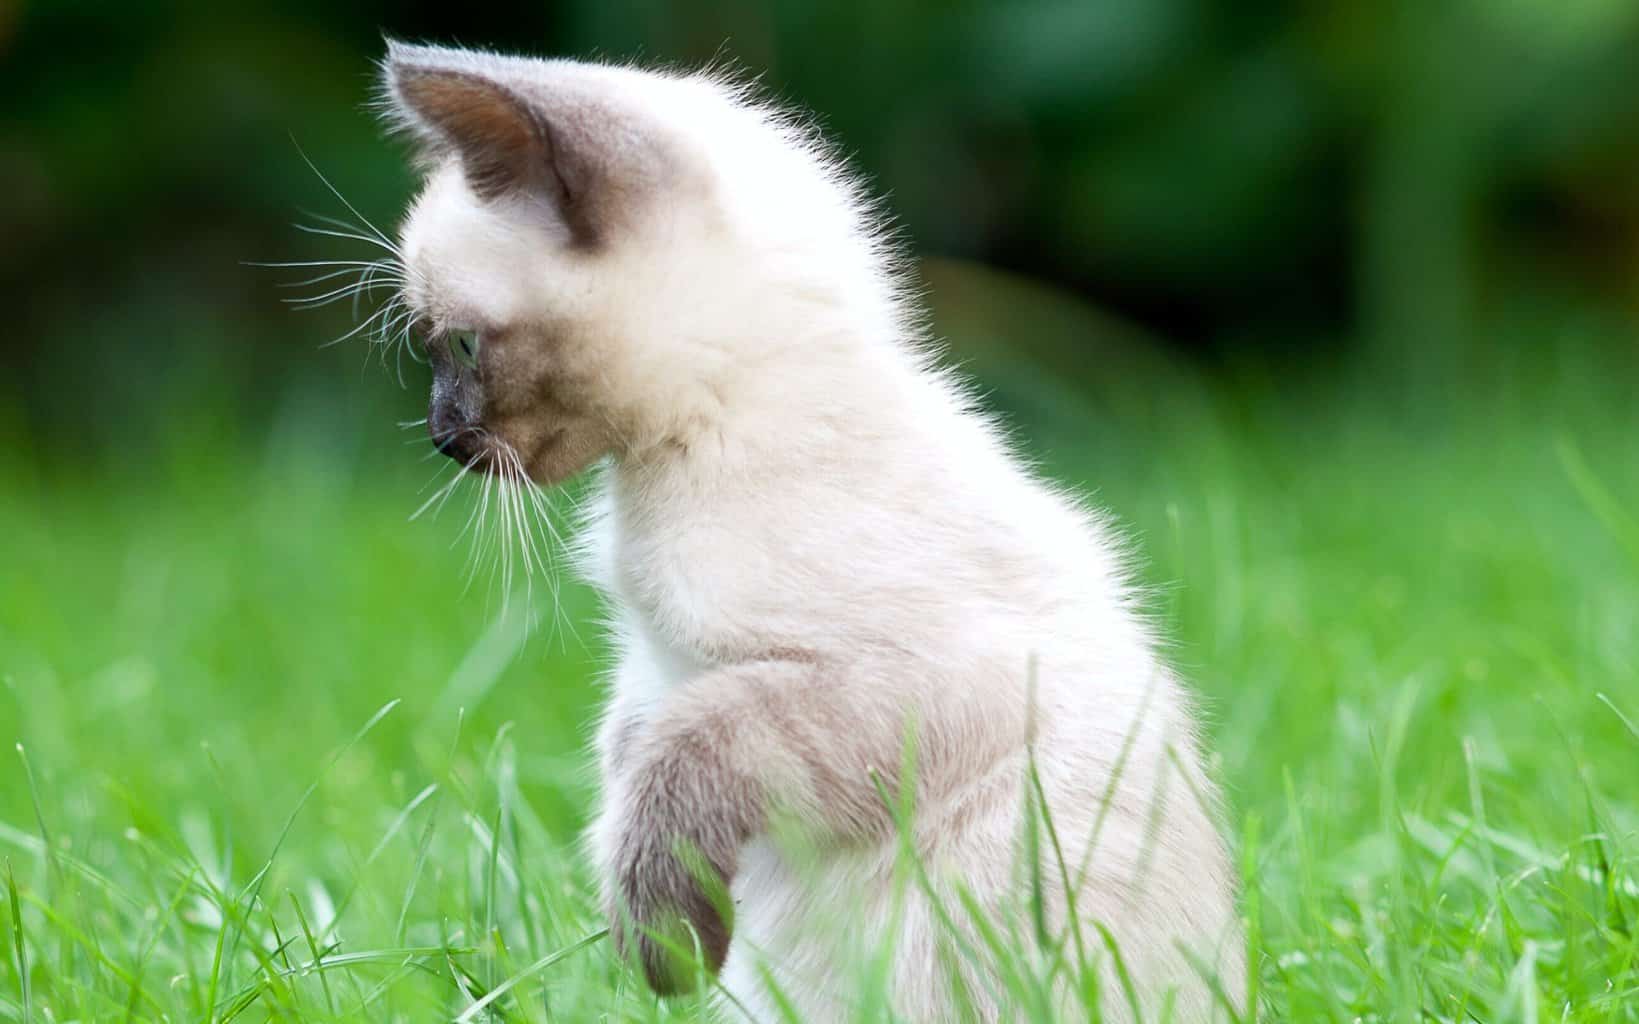 siamese kitten in the grass